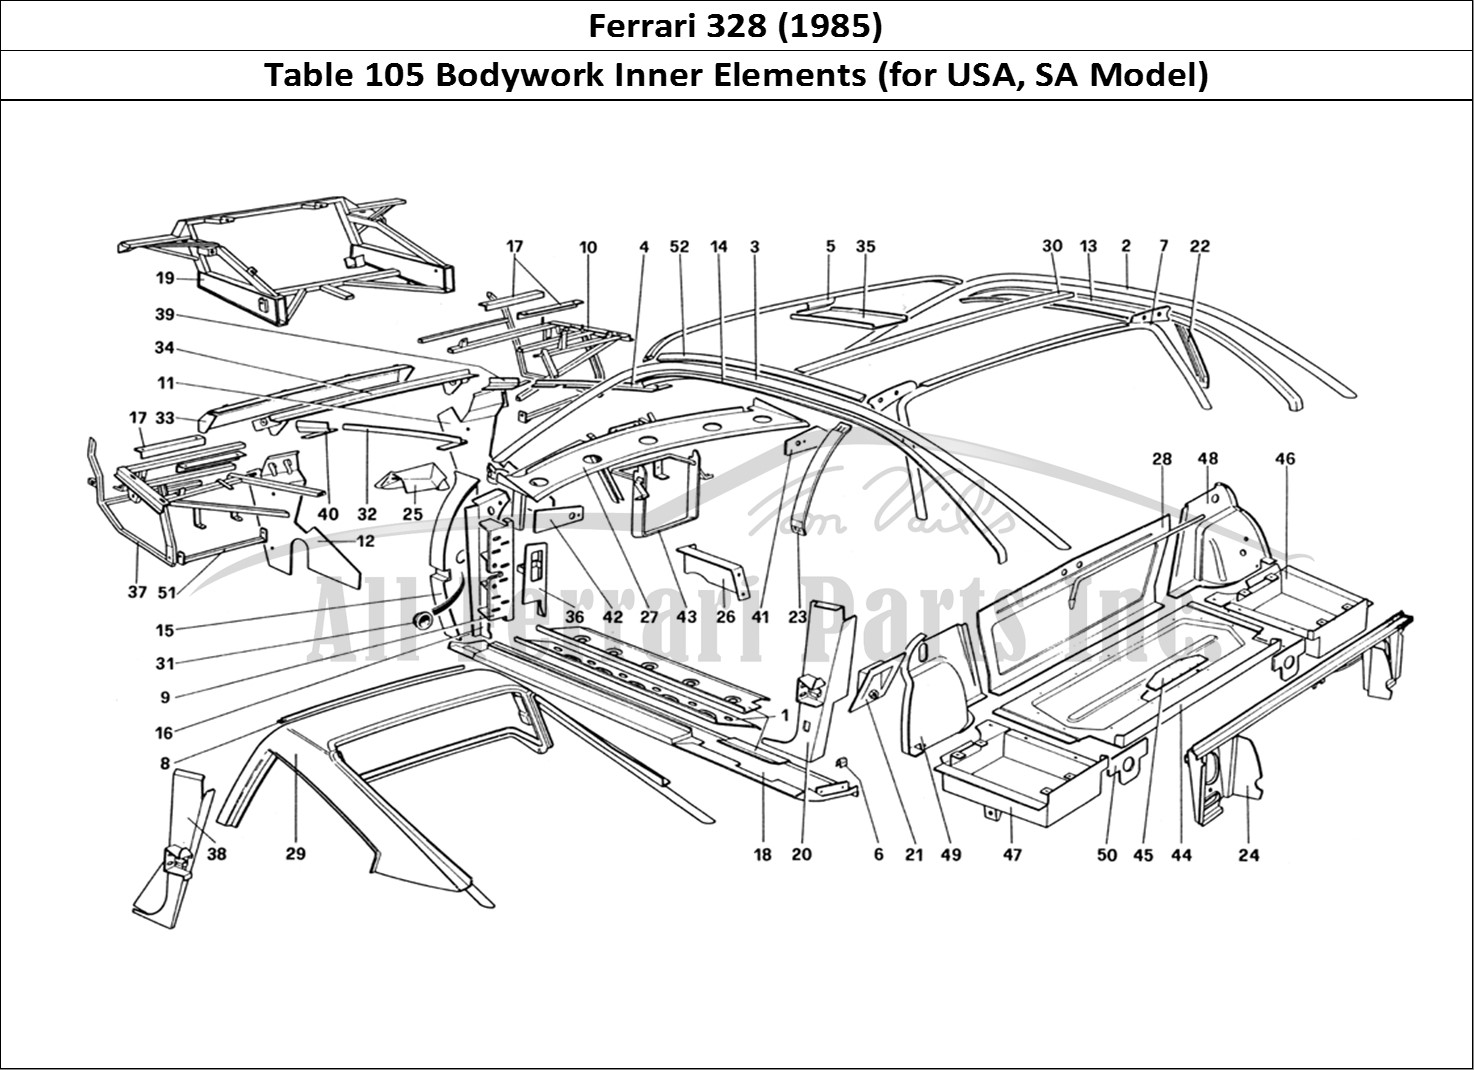 Ferrari Parts Ferrari 328 (1985) Page 105 Body Shell - Inner Elemen